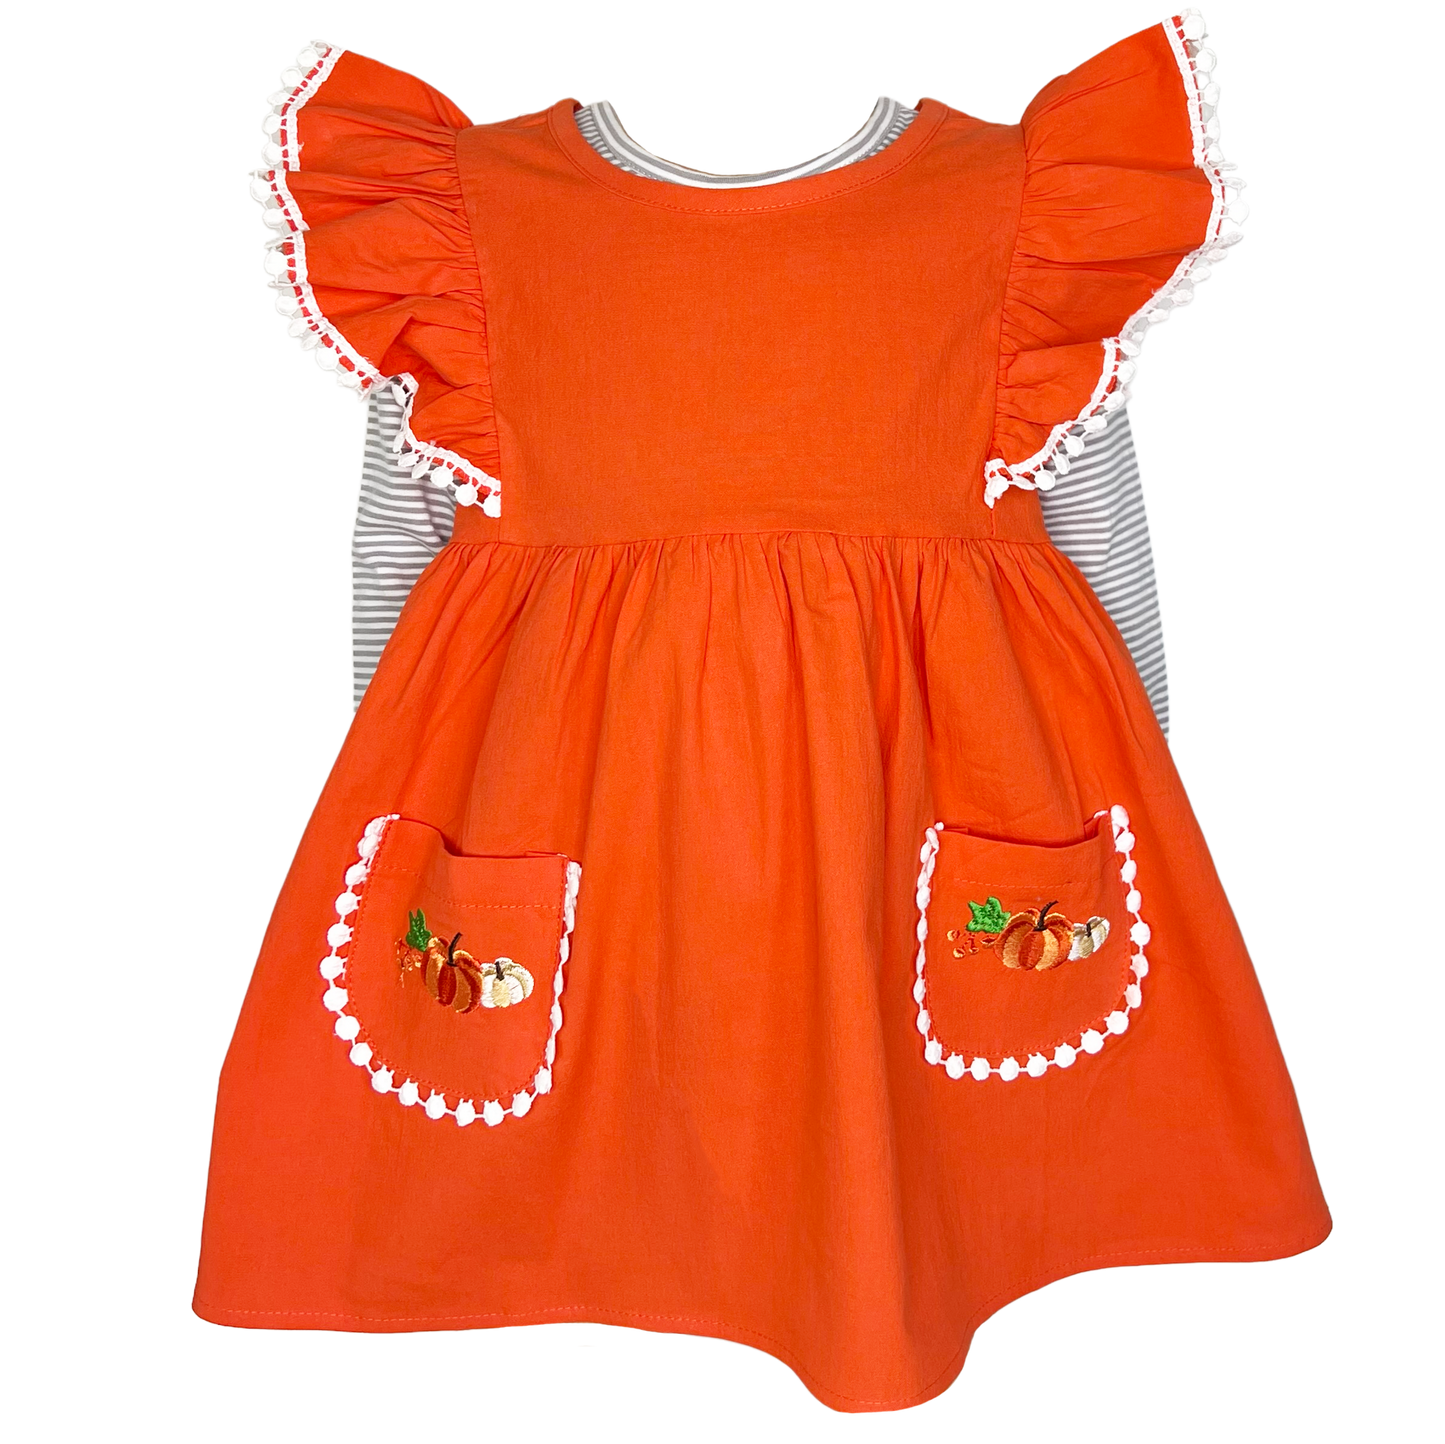 Girls Orange Fall Dress Pockets Long Sleeves Thanksgiving Party Dress